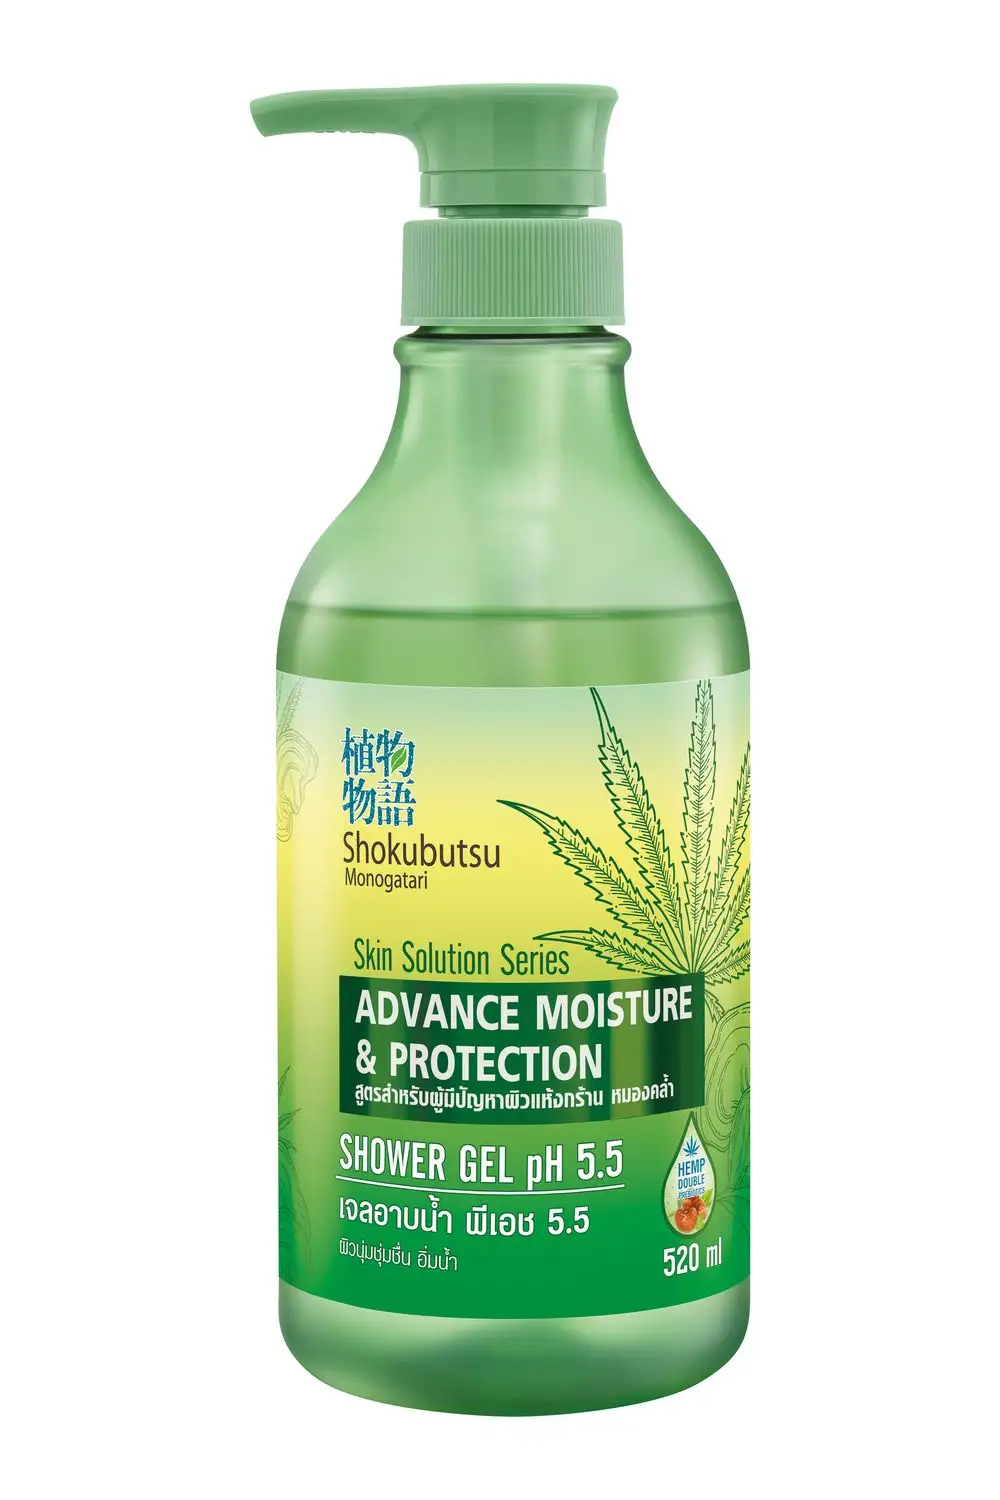 Shokubutsu Shower Bath Gel Skin Solution Series Advance Moisture & Protection Formula for Family